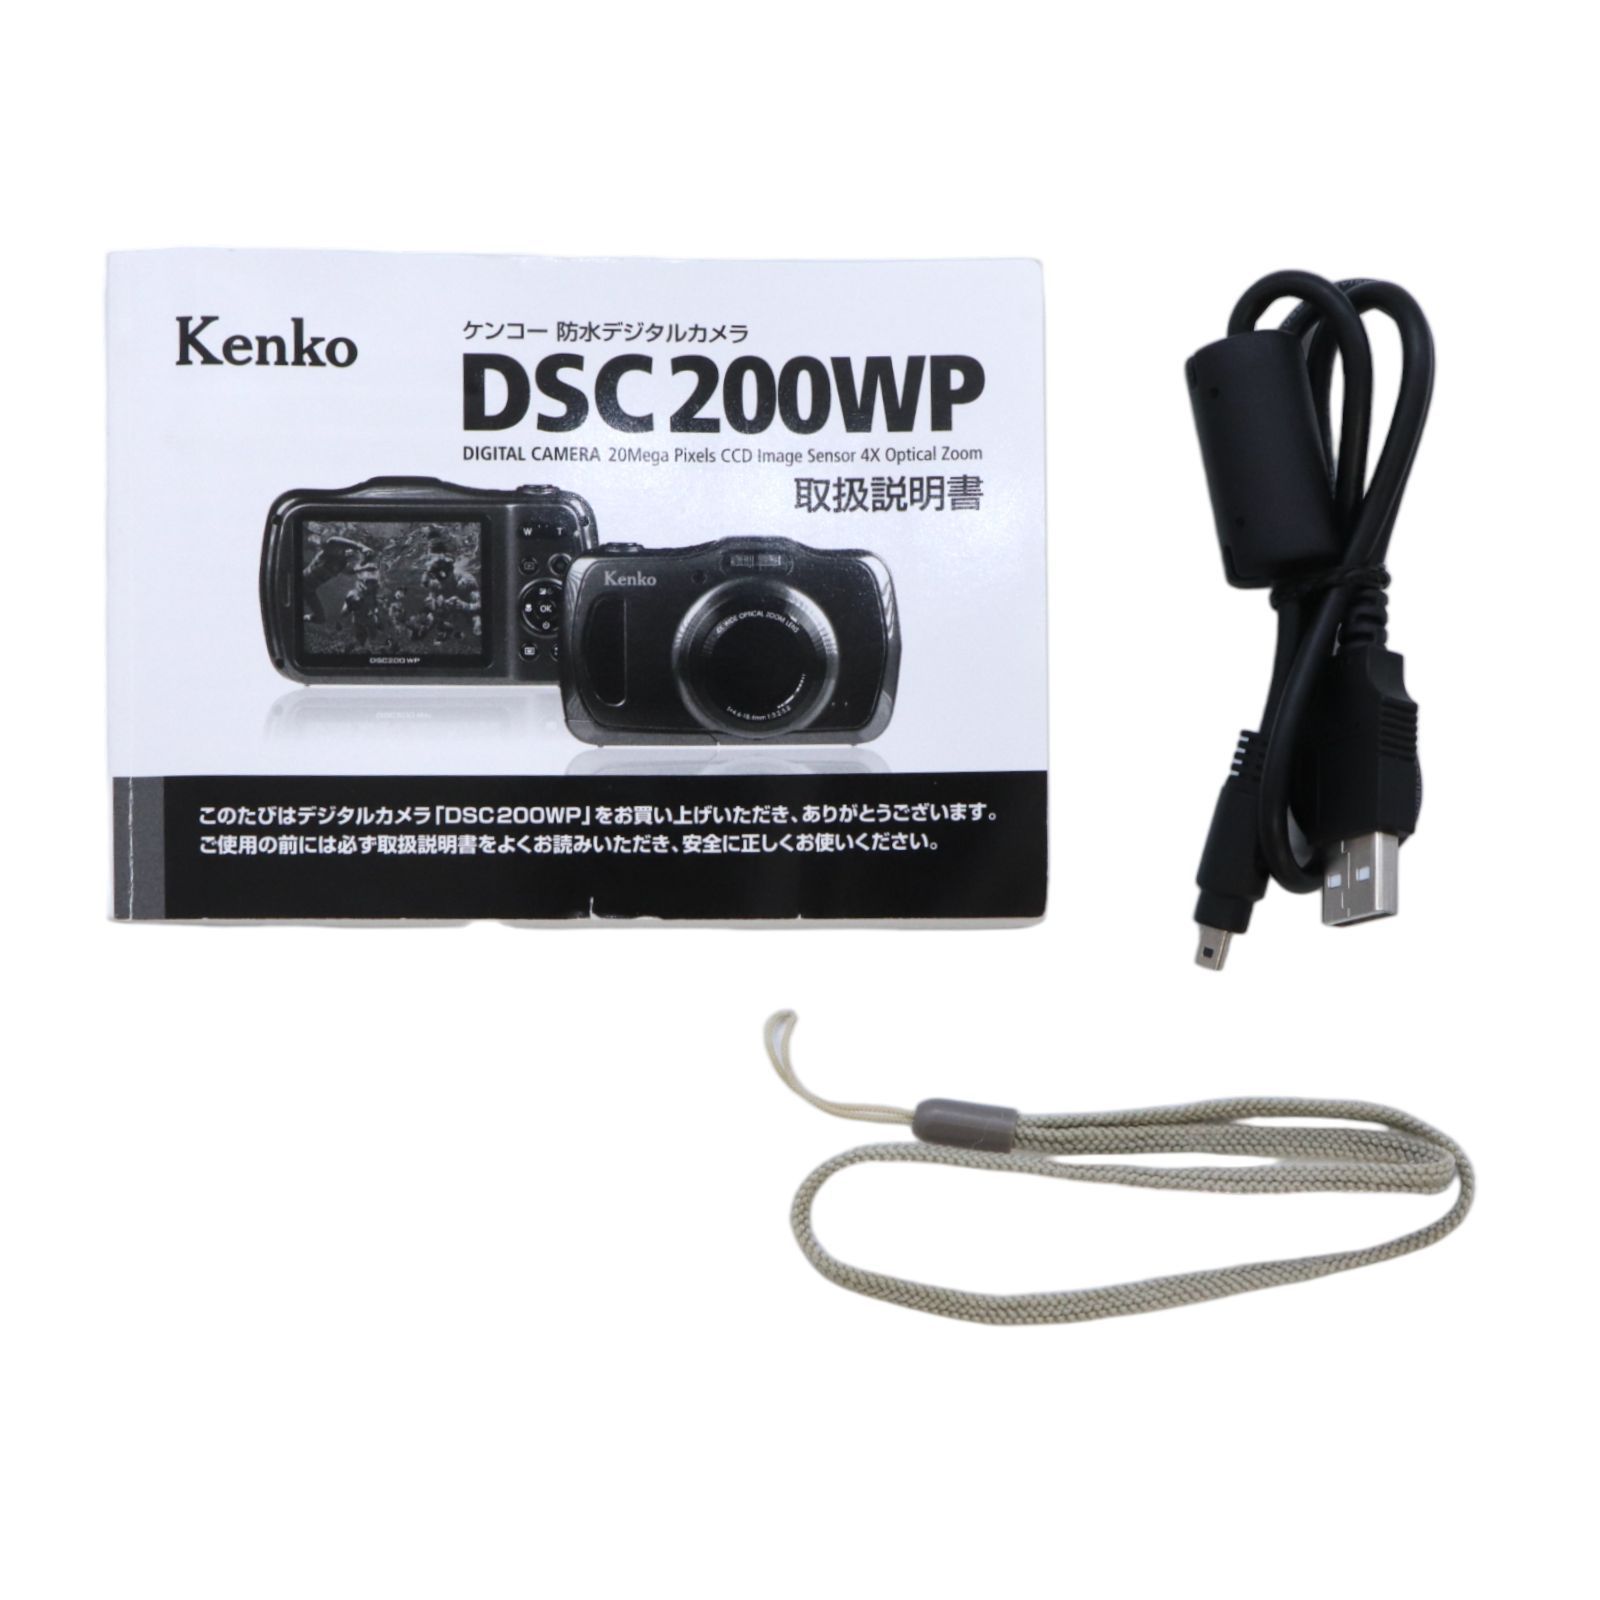 Kenko DSC200WP ケンコー 防水デジタルカメラ - デジタルカメラ